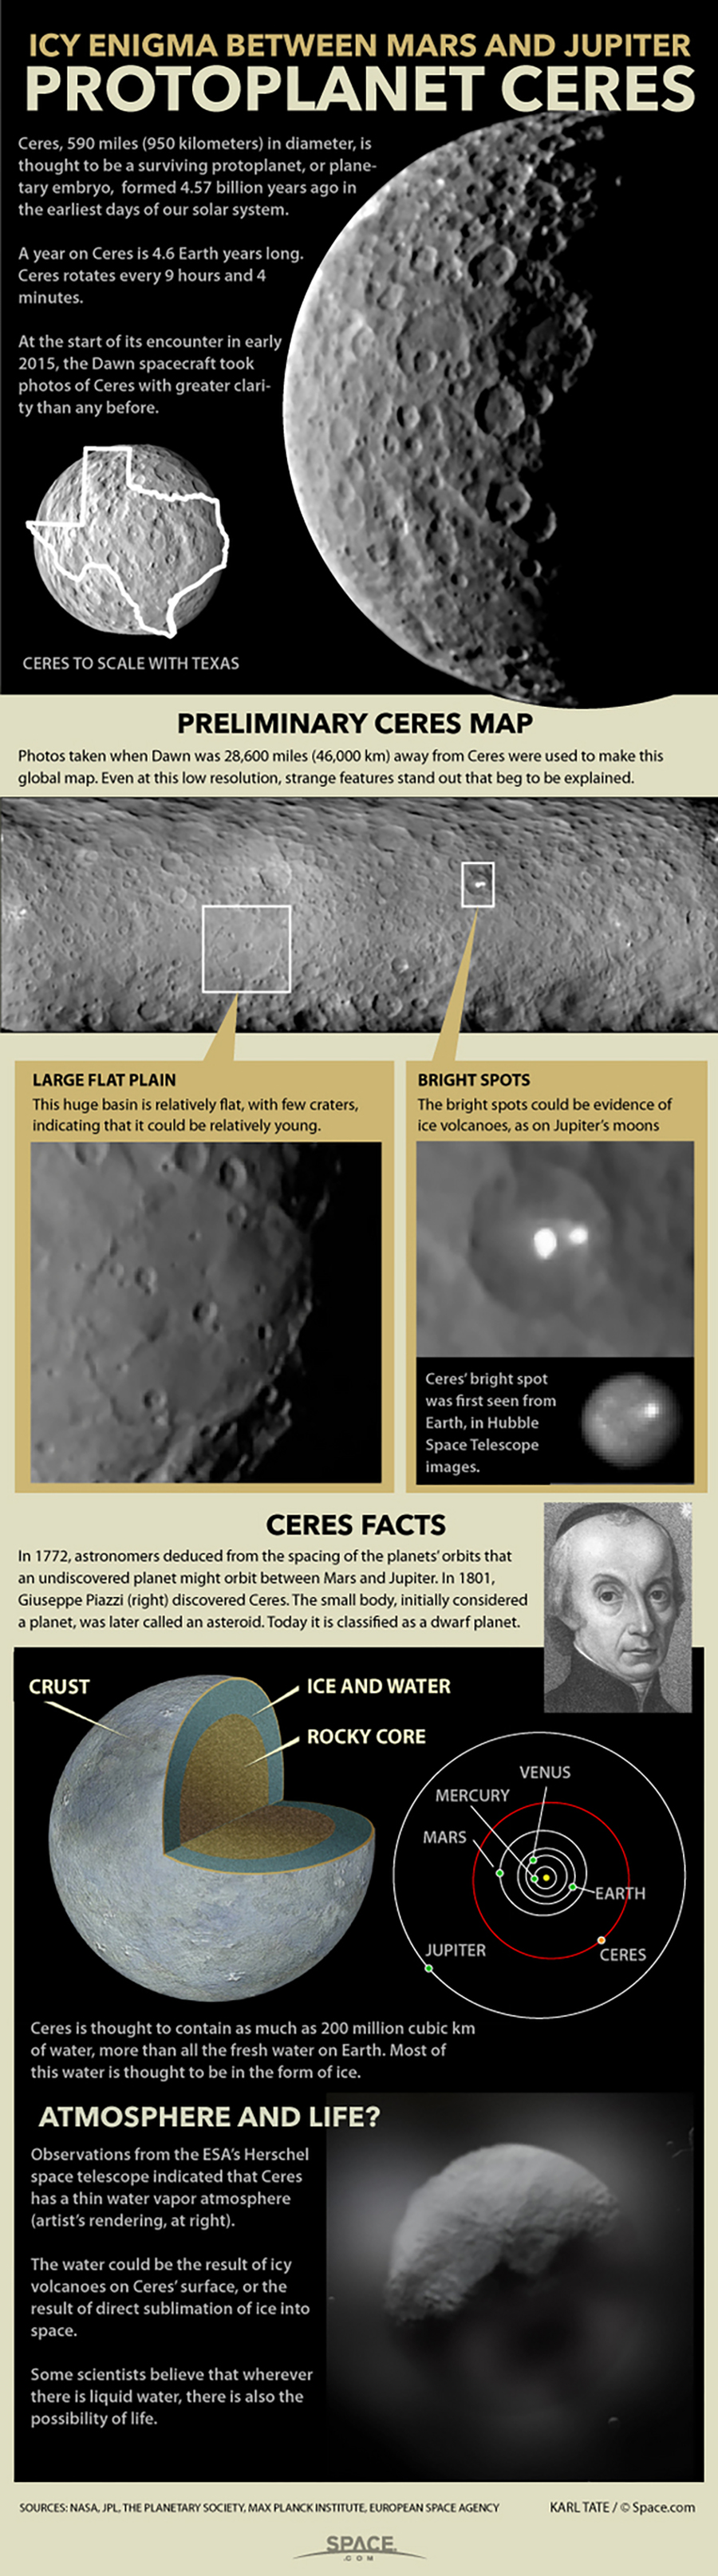 ceres-protoplanet-dawn-150128b-02